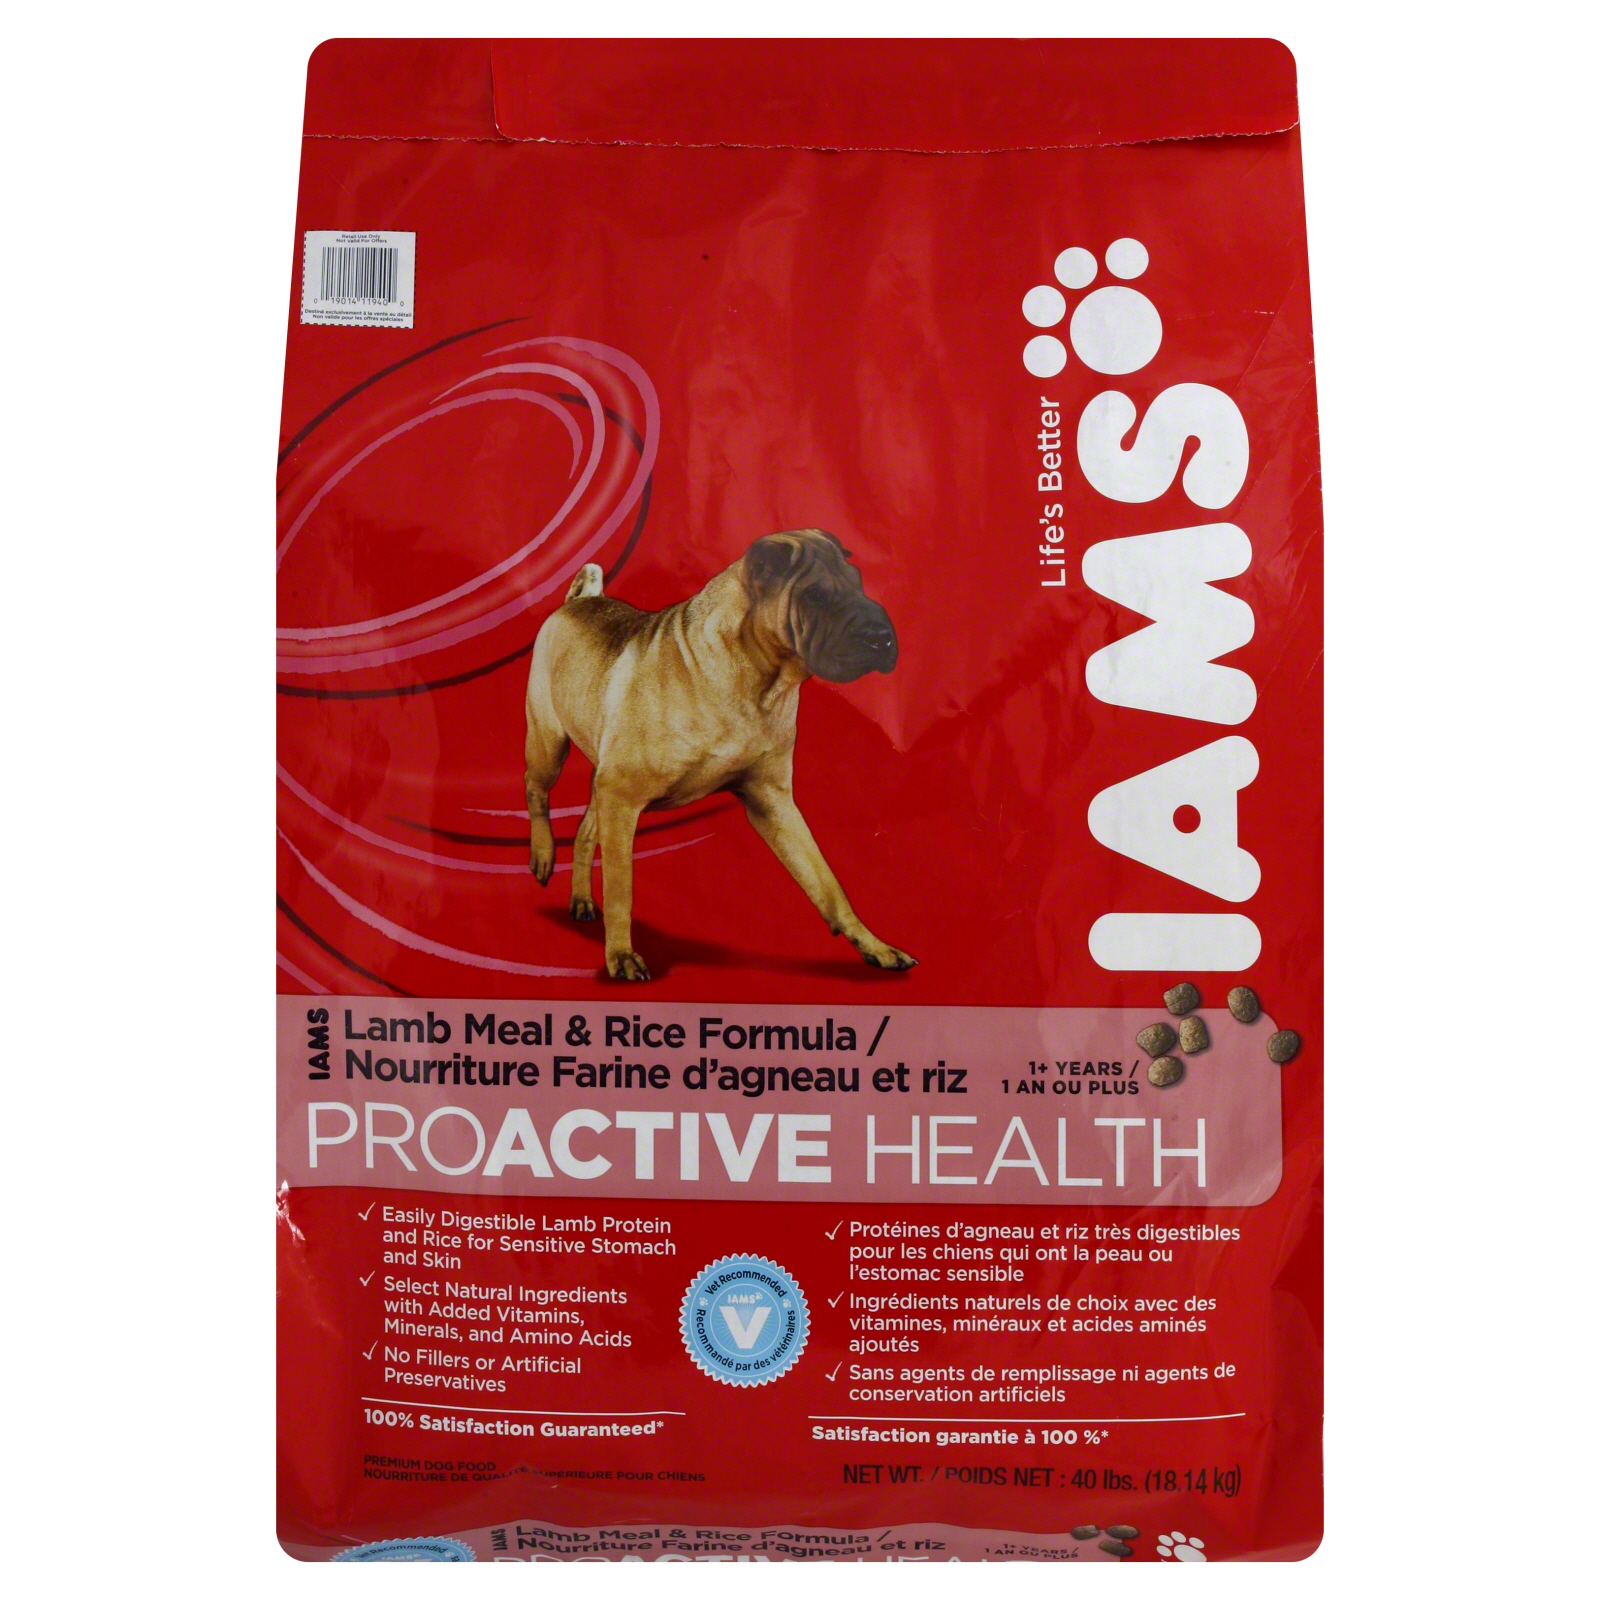 Iams Proactive Health Premium Dog Food, Lamb Meal & Rice Formula, 1+ Years, 40 lb (18.14 kg)